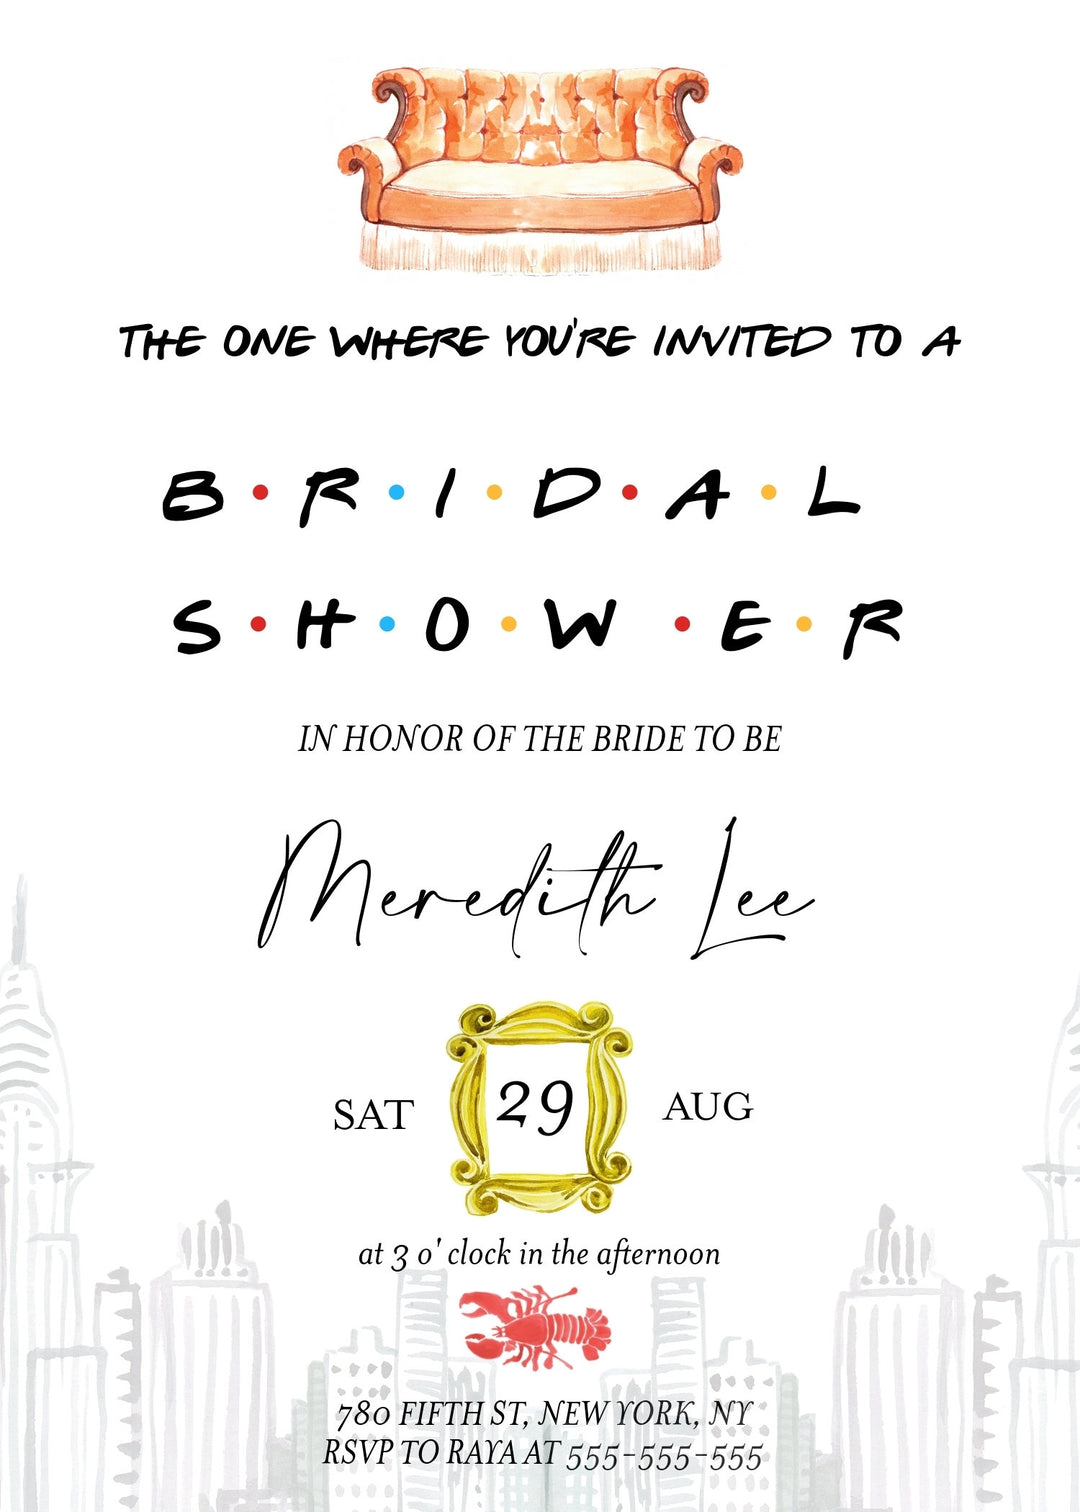 Friends Theme Bridal Shower Invitation - Central Perk Bridal Shower Invitation - NYC Bridal Shower Invitation - He's Her Lobster Invitation